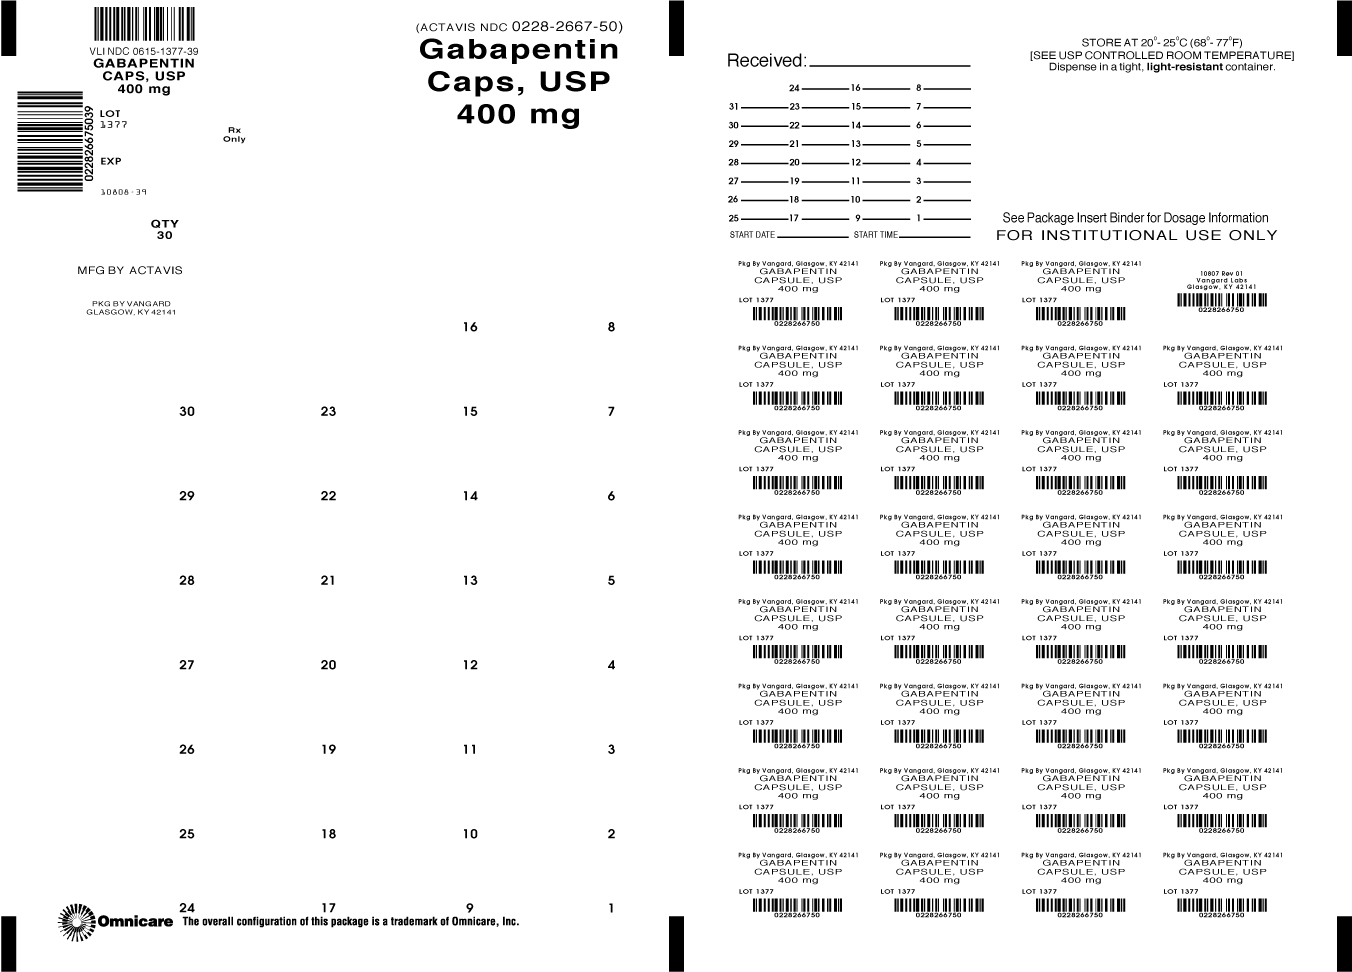 Principal Display Panel-Gabapentin Caps, USP 400mg